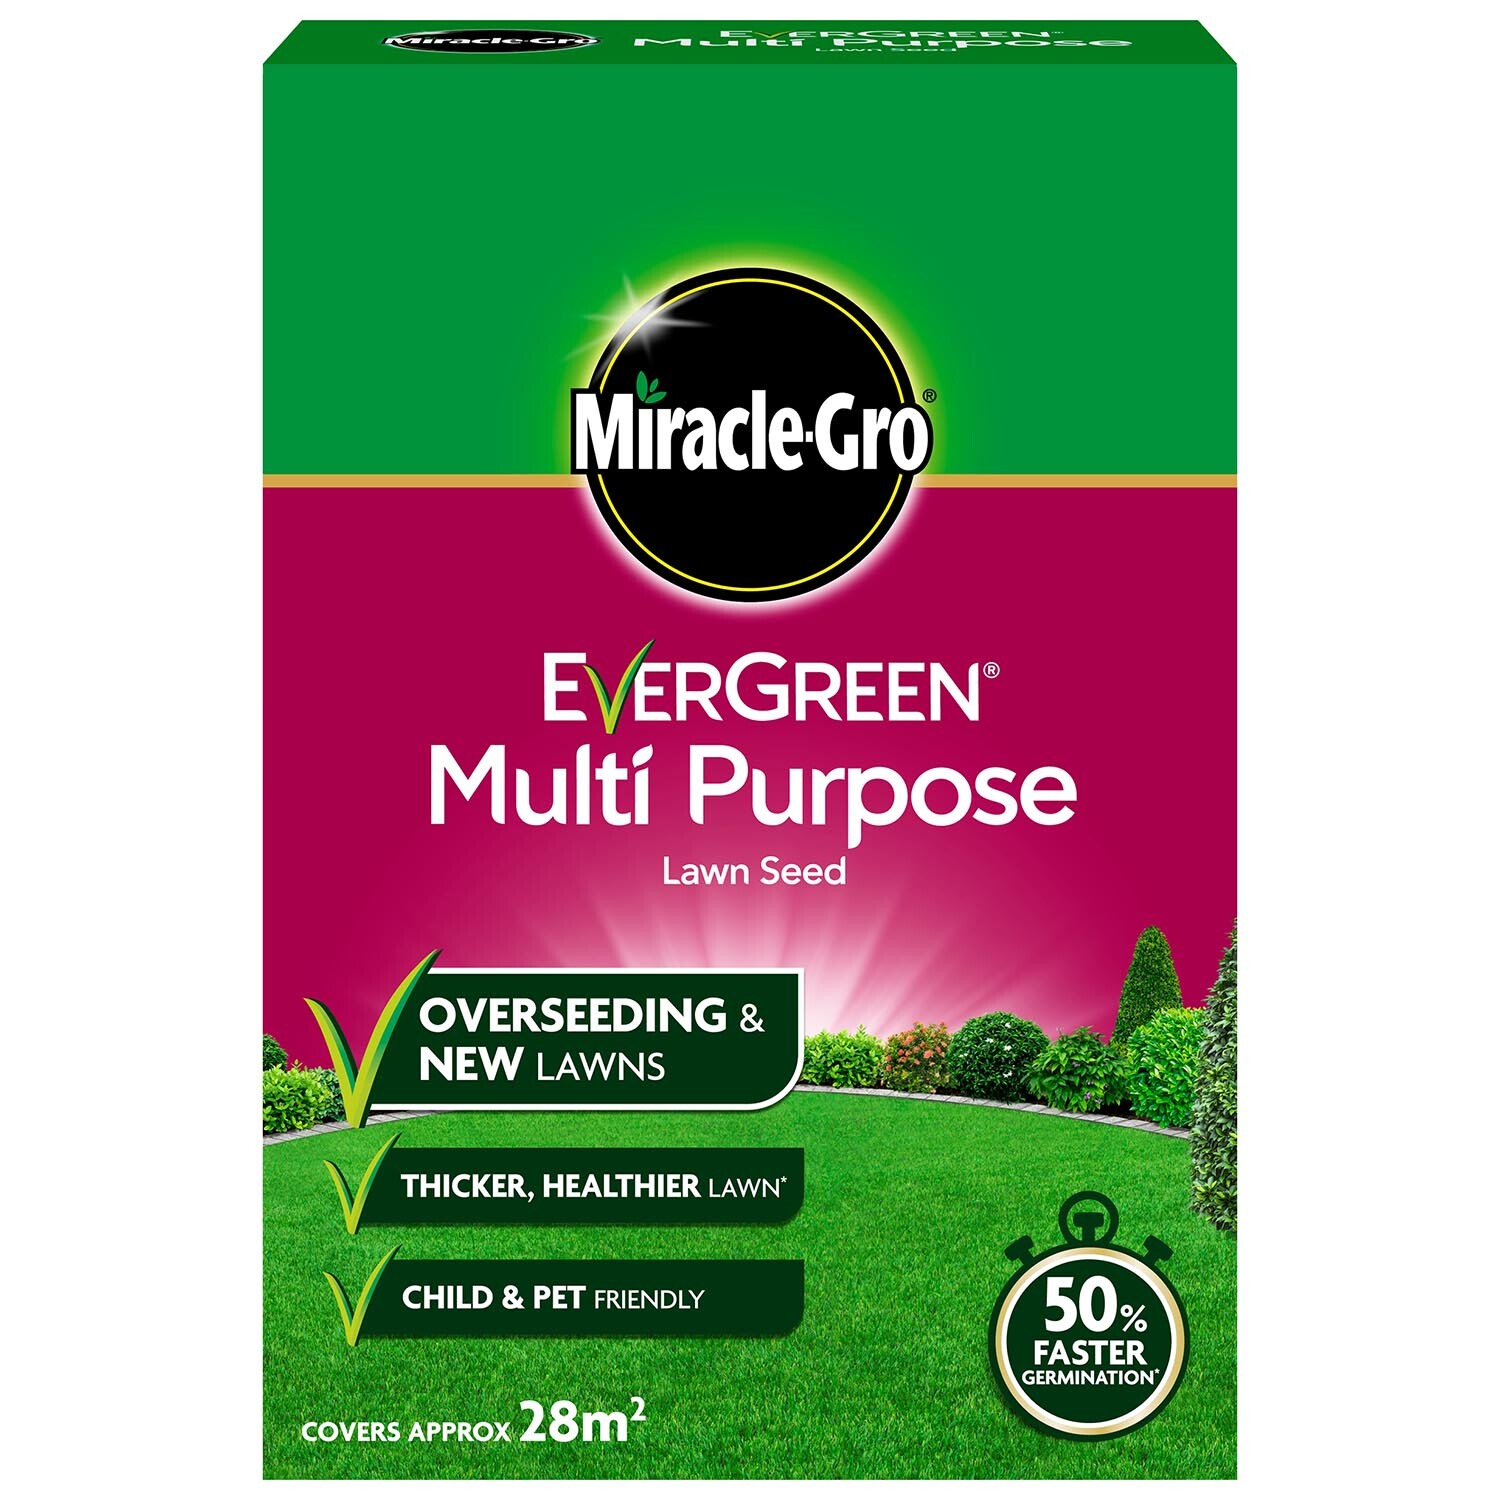 Miracle-Gro Evergreen Multi Purpose Lawn Seed Image 1